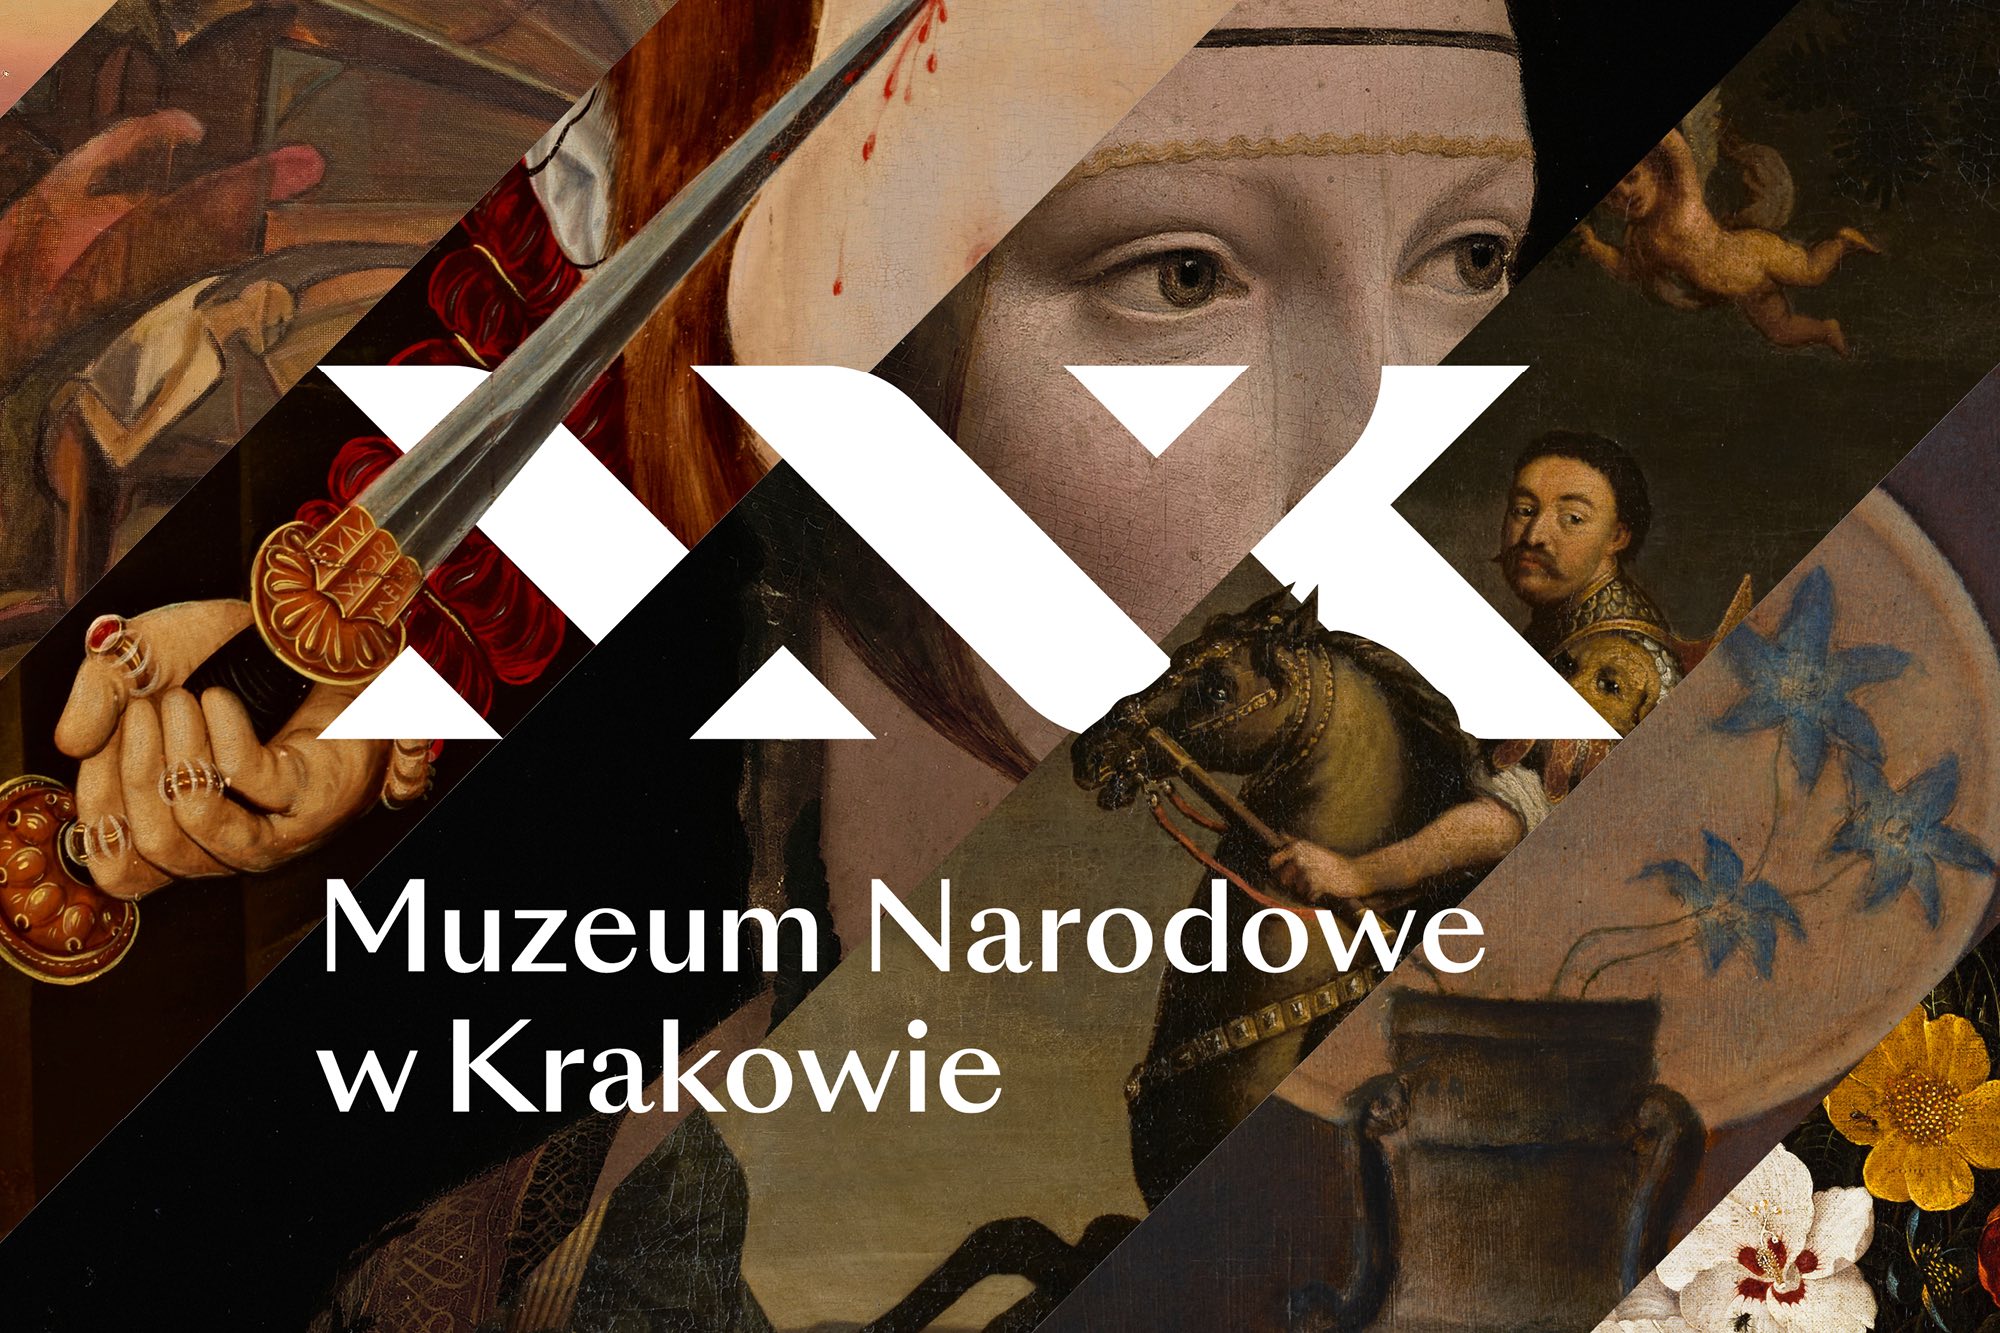 The National Museum in Kraków Brand Identity Designed by Podpunkt Studio